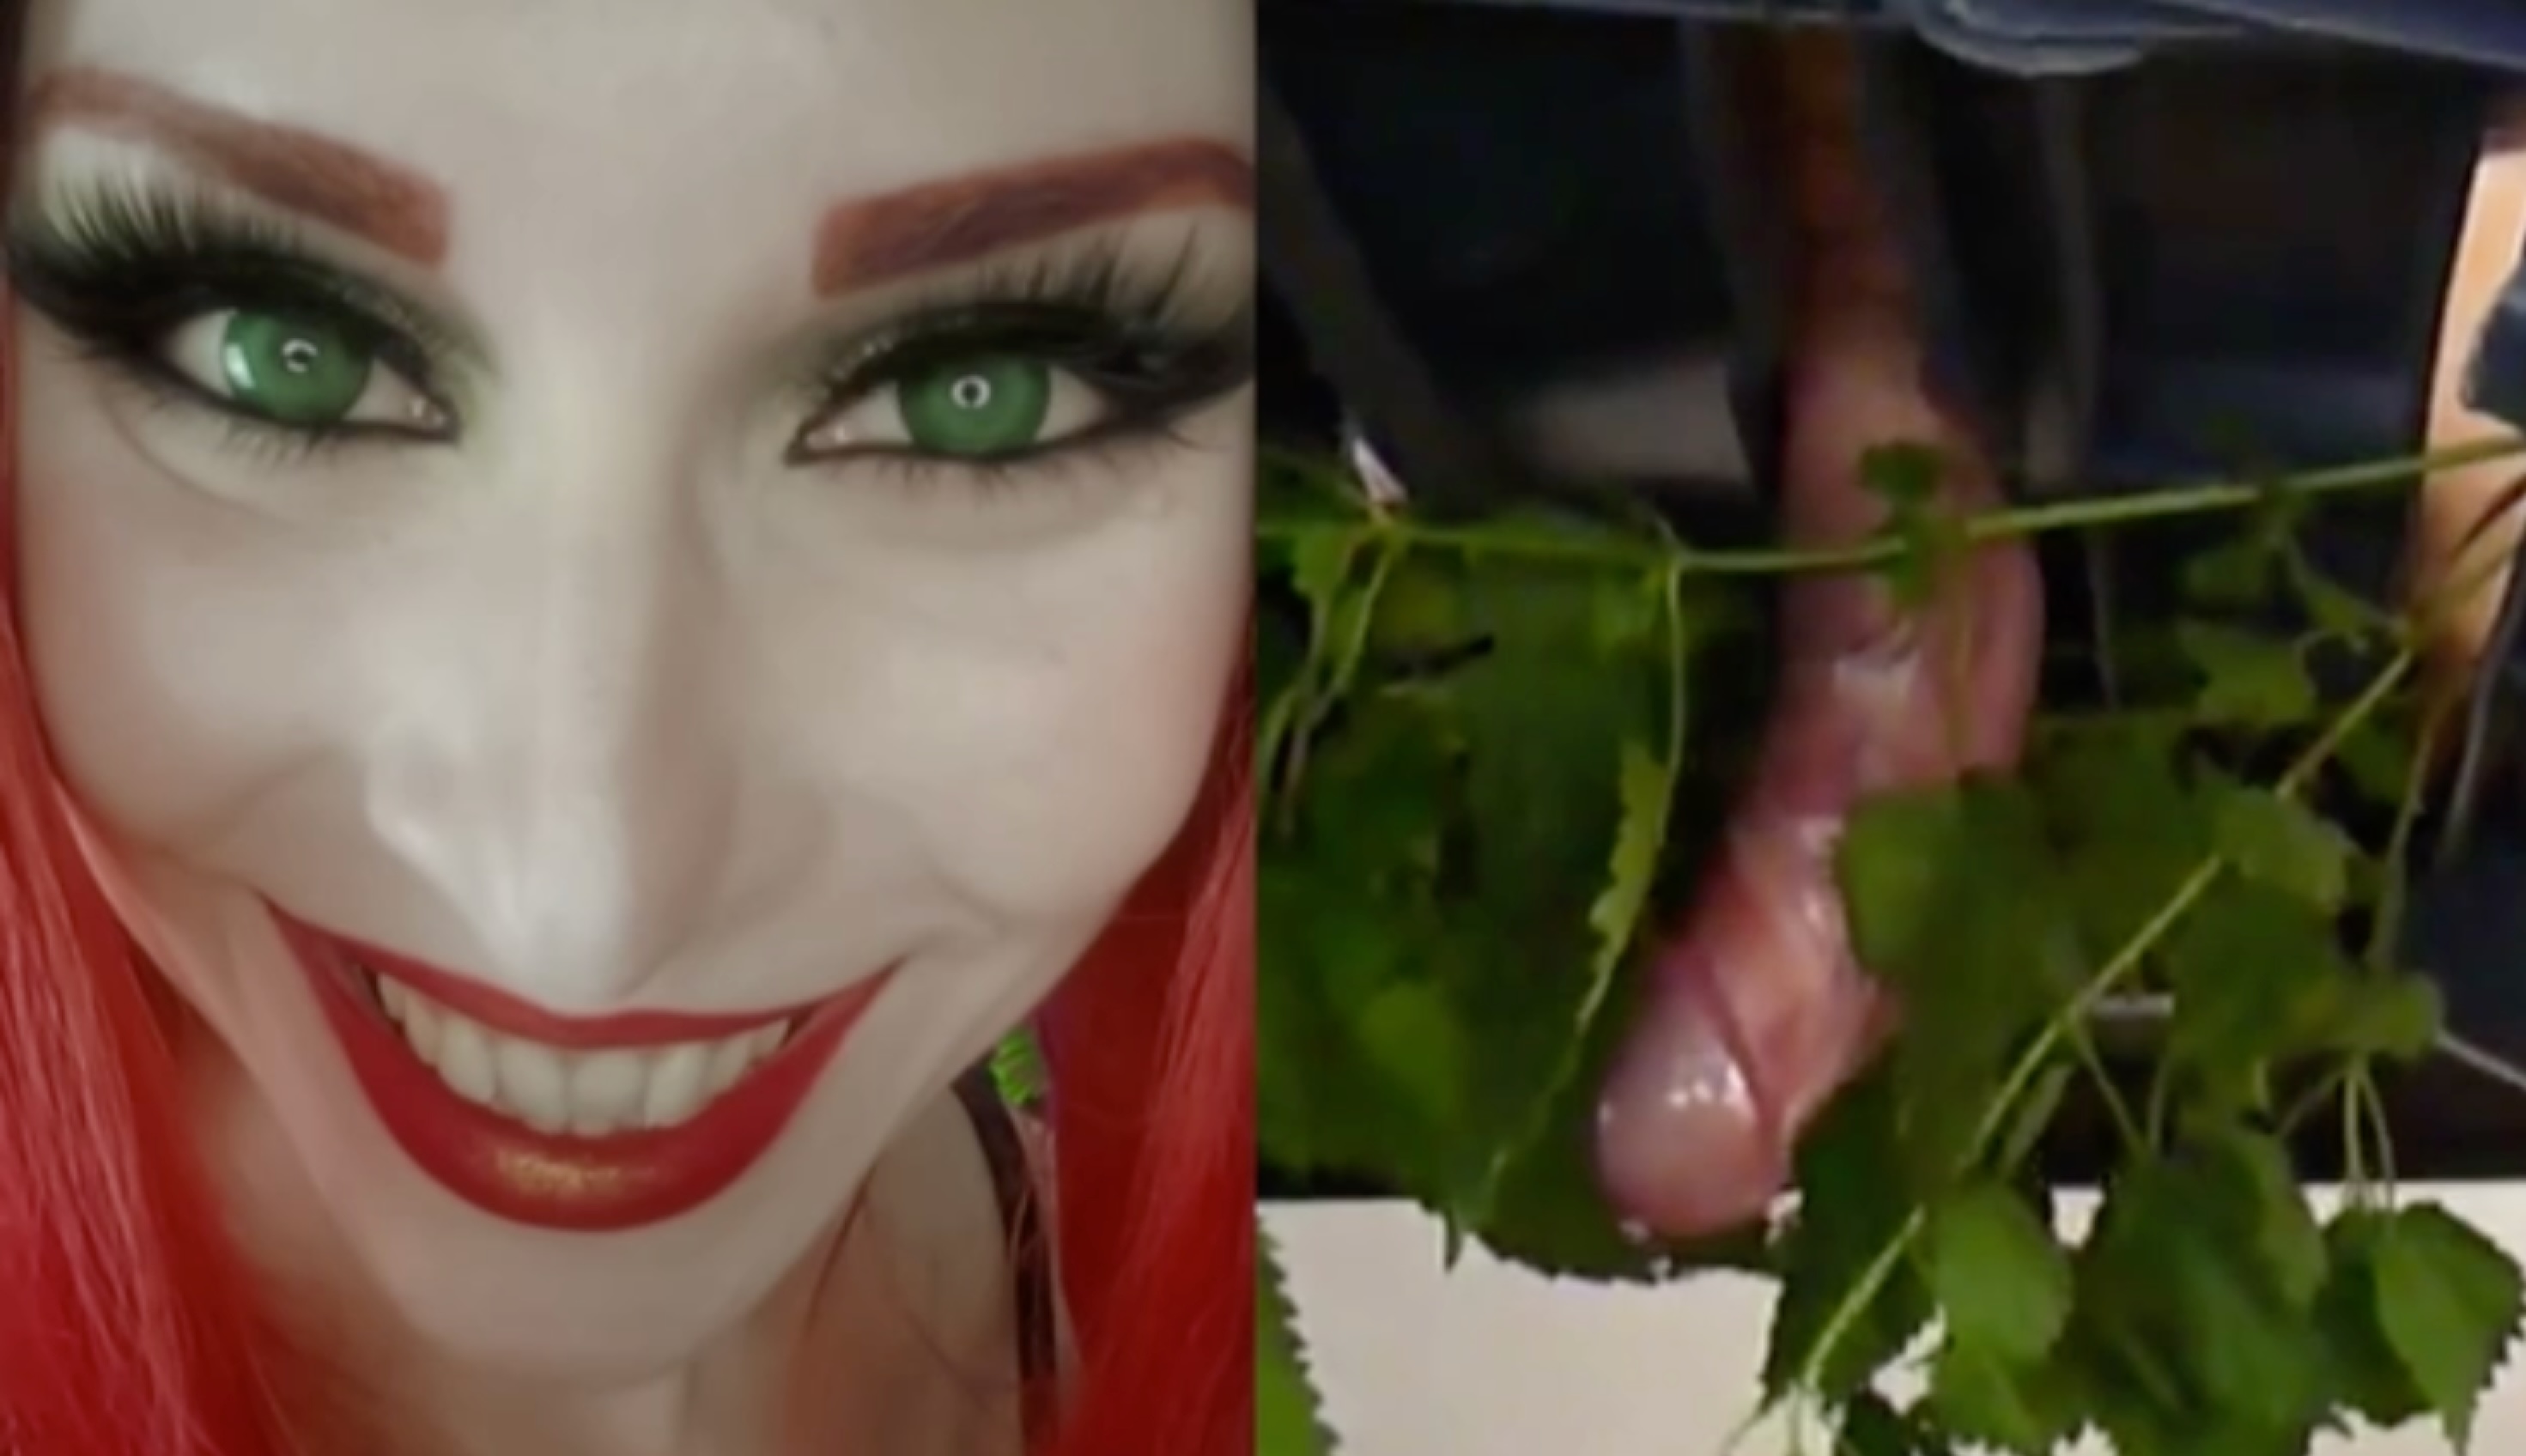 Poison Ivy Femdom JOI Stinging Nettles CBT (Collage)